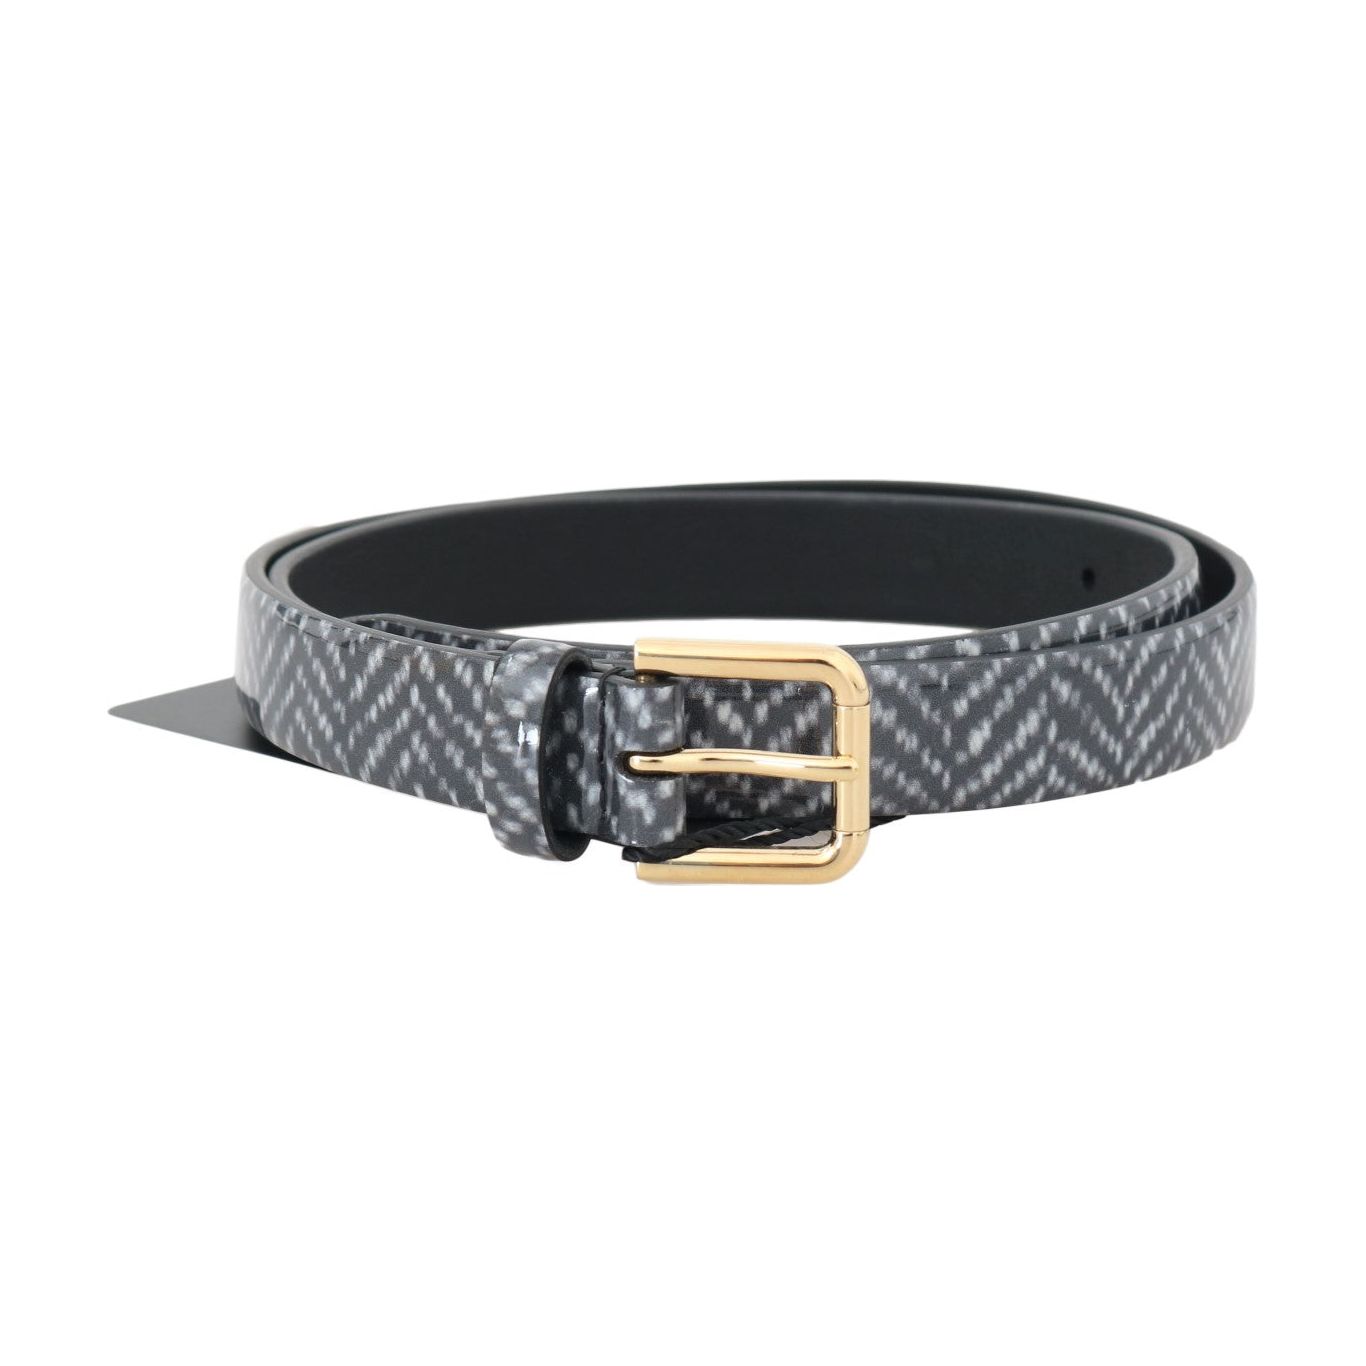 Dolce & Gabbana Elegant Chevron Leather Waist Belt Belt black-white-chevron-pattern-leather-belt 496158-black-white-chevron-pattern-leather-belt.jpg